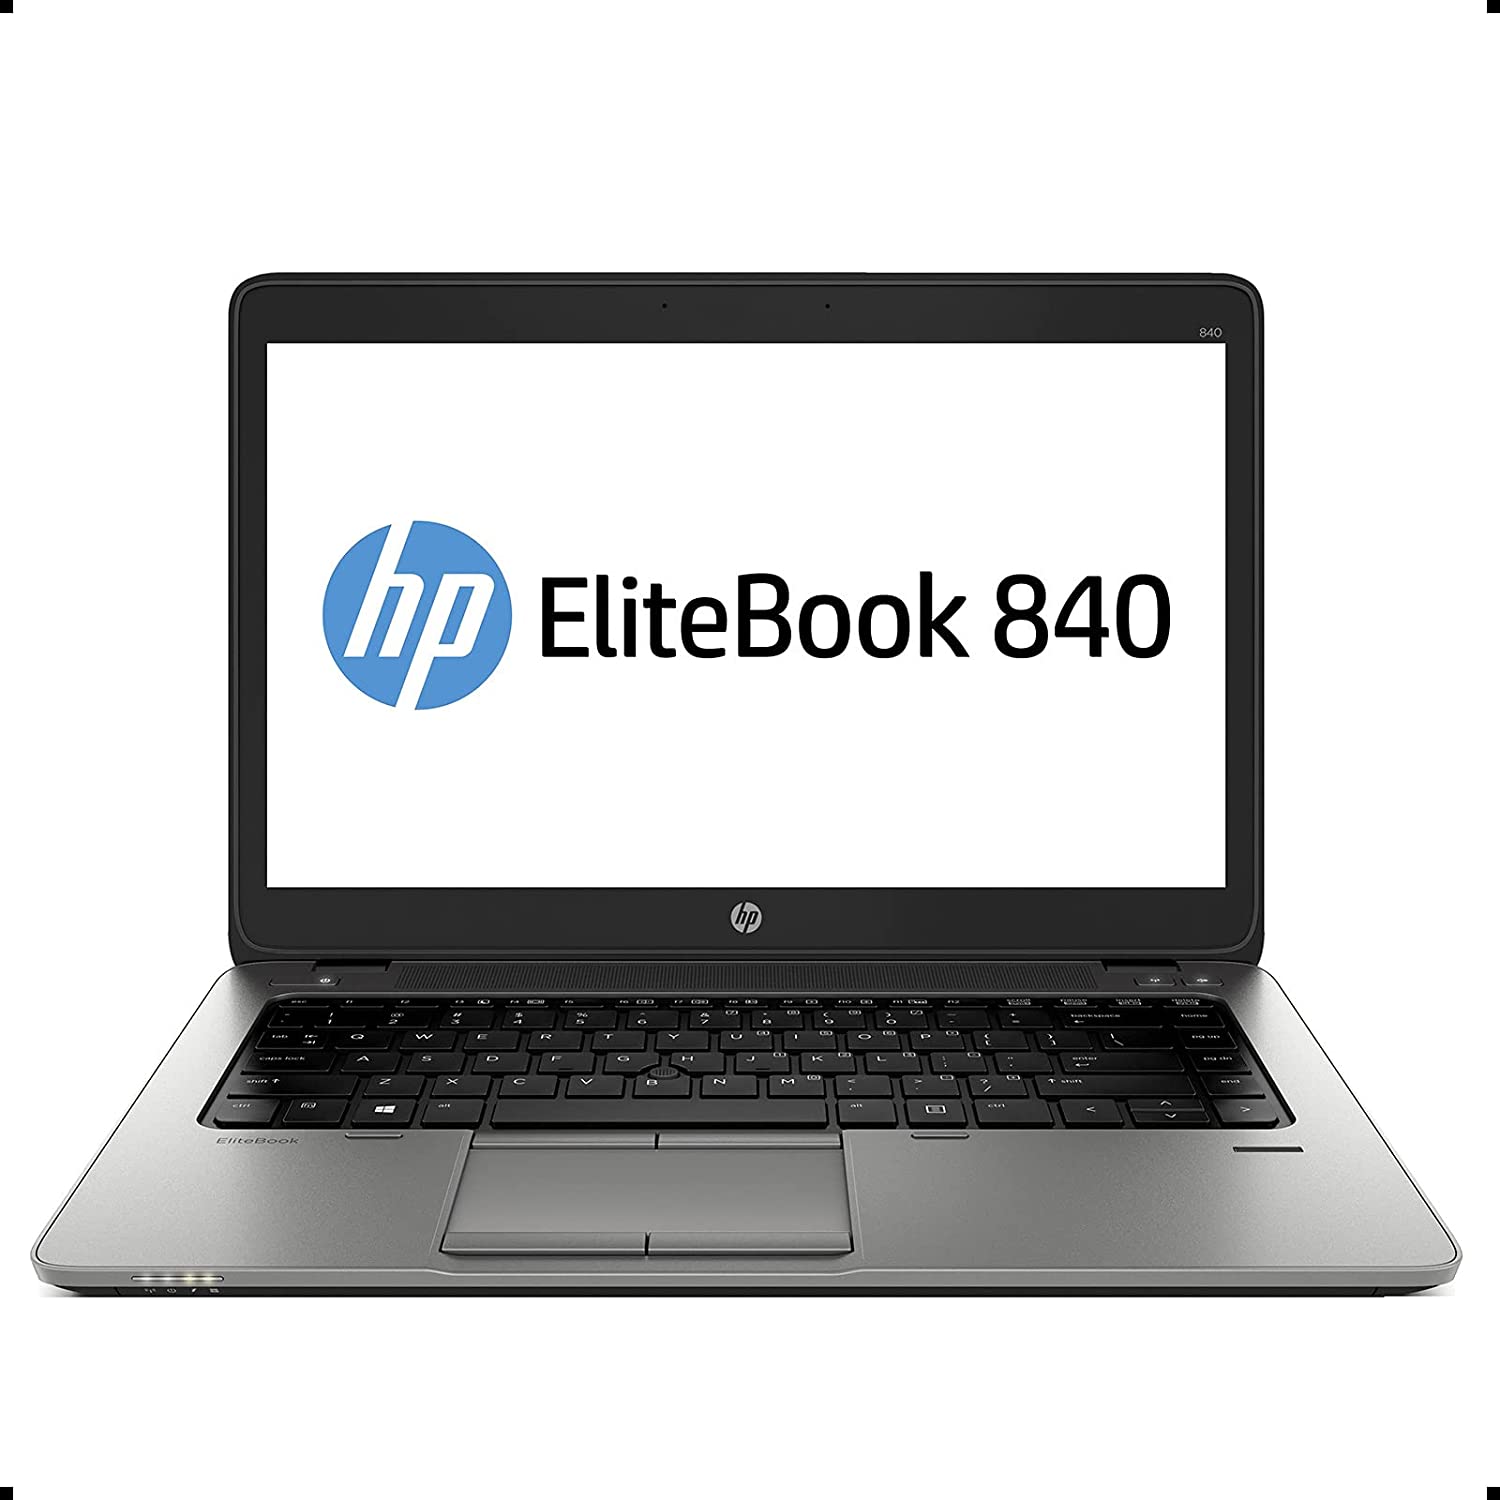 Refurbished HP Elitebook 840 G2 i7 Laptop 5th Gen, 8Gb Ram, 240Gb SSD